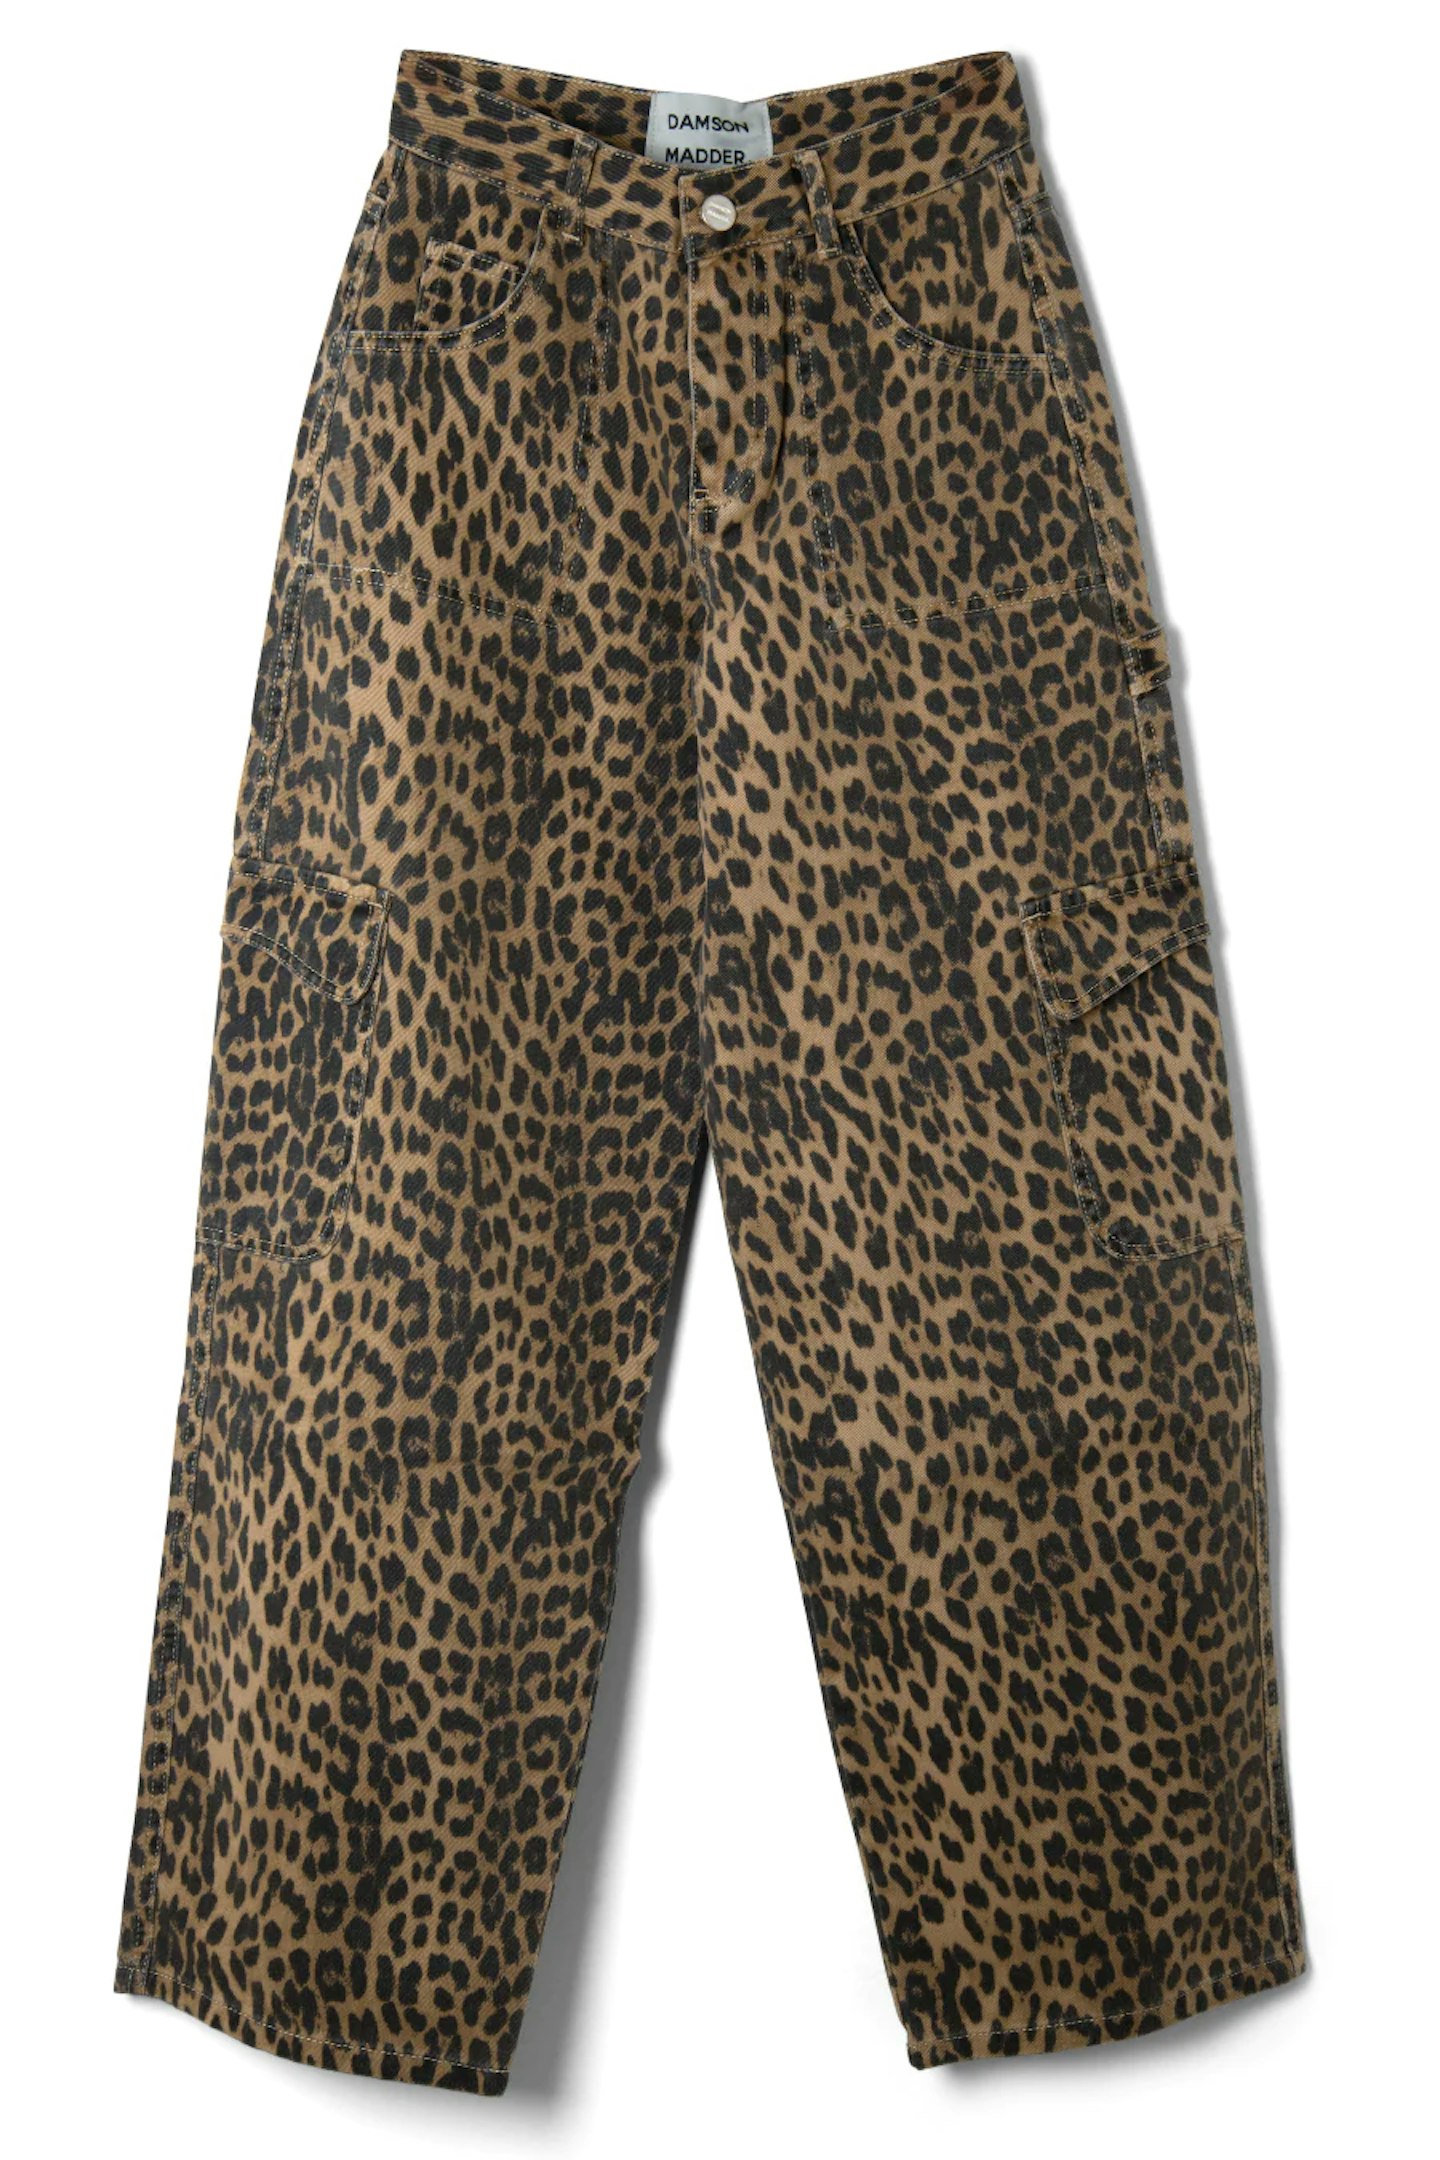 damson madder leopard jeans 